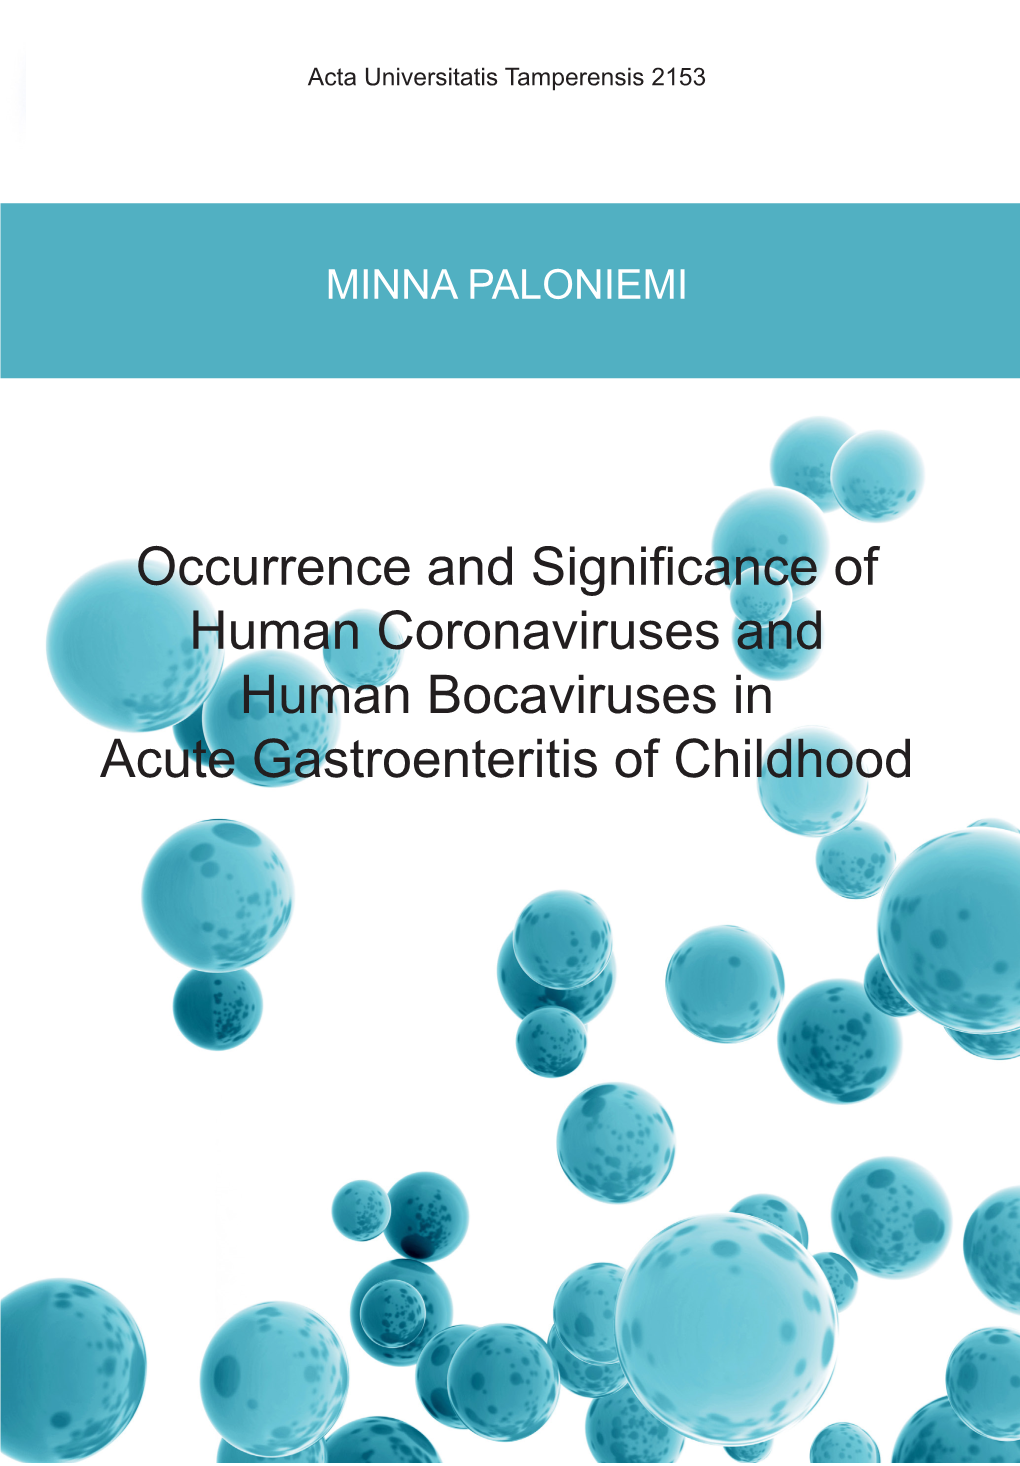 Occurrence and Significance of Human Coronaviruses and Human Bocaviruses in Acute Gastroenteritis of Childhood AUT 2153 MINNA PALONIEMI